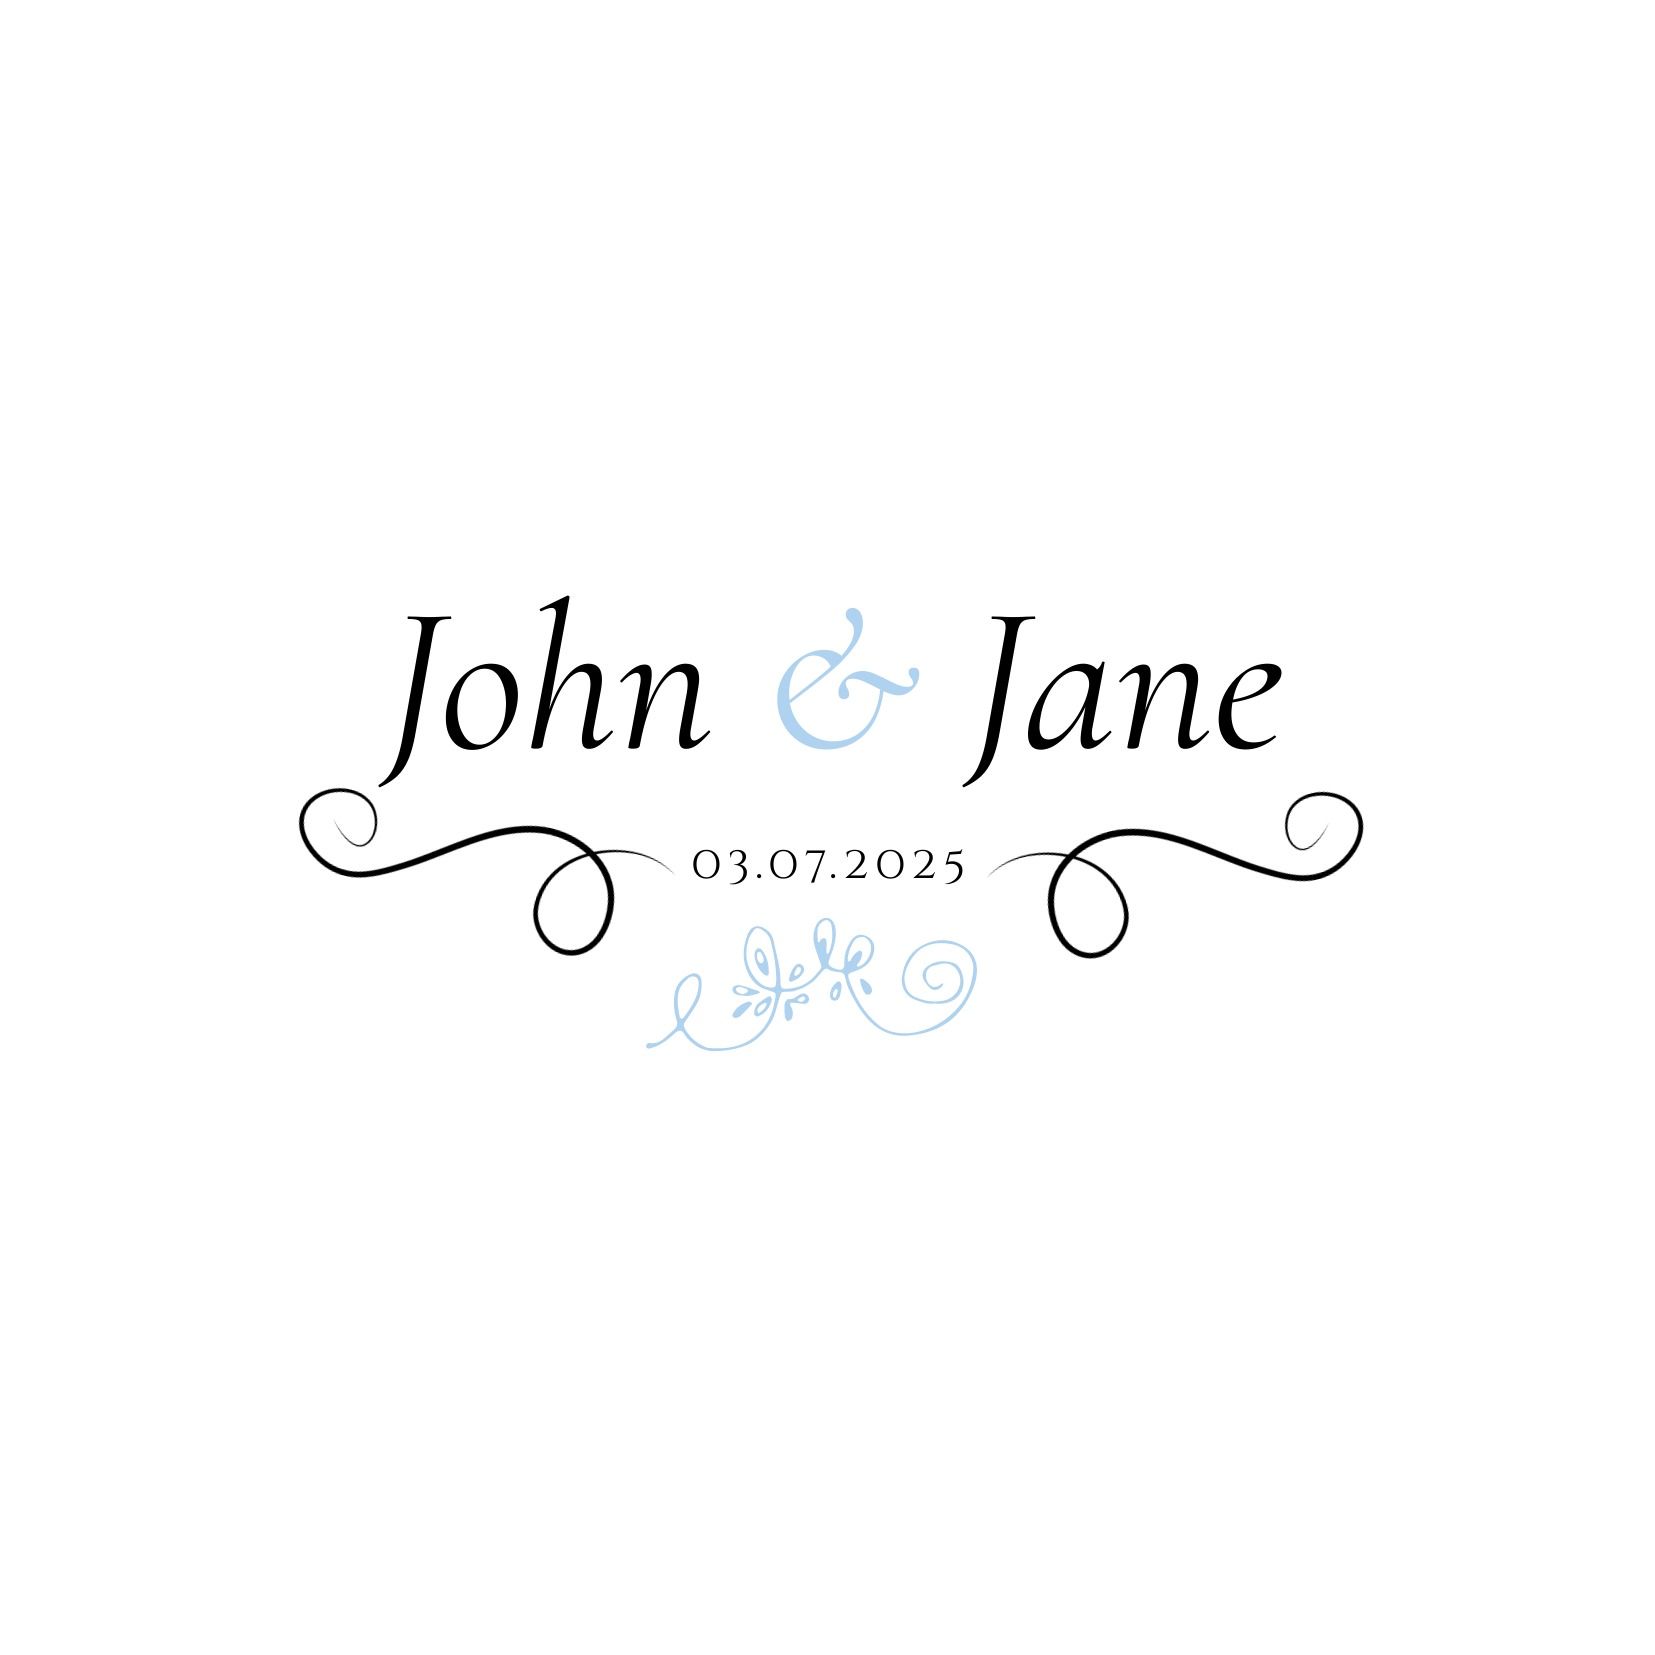 Wedding logo with the title 'John & Jane' in Cormorant Garamond font - The eloquence of the Cormorant Garamond font - Image